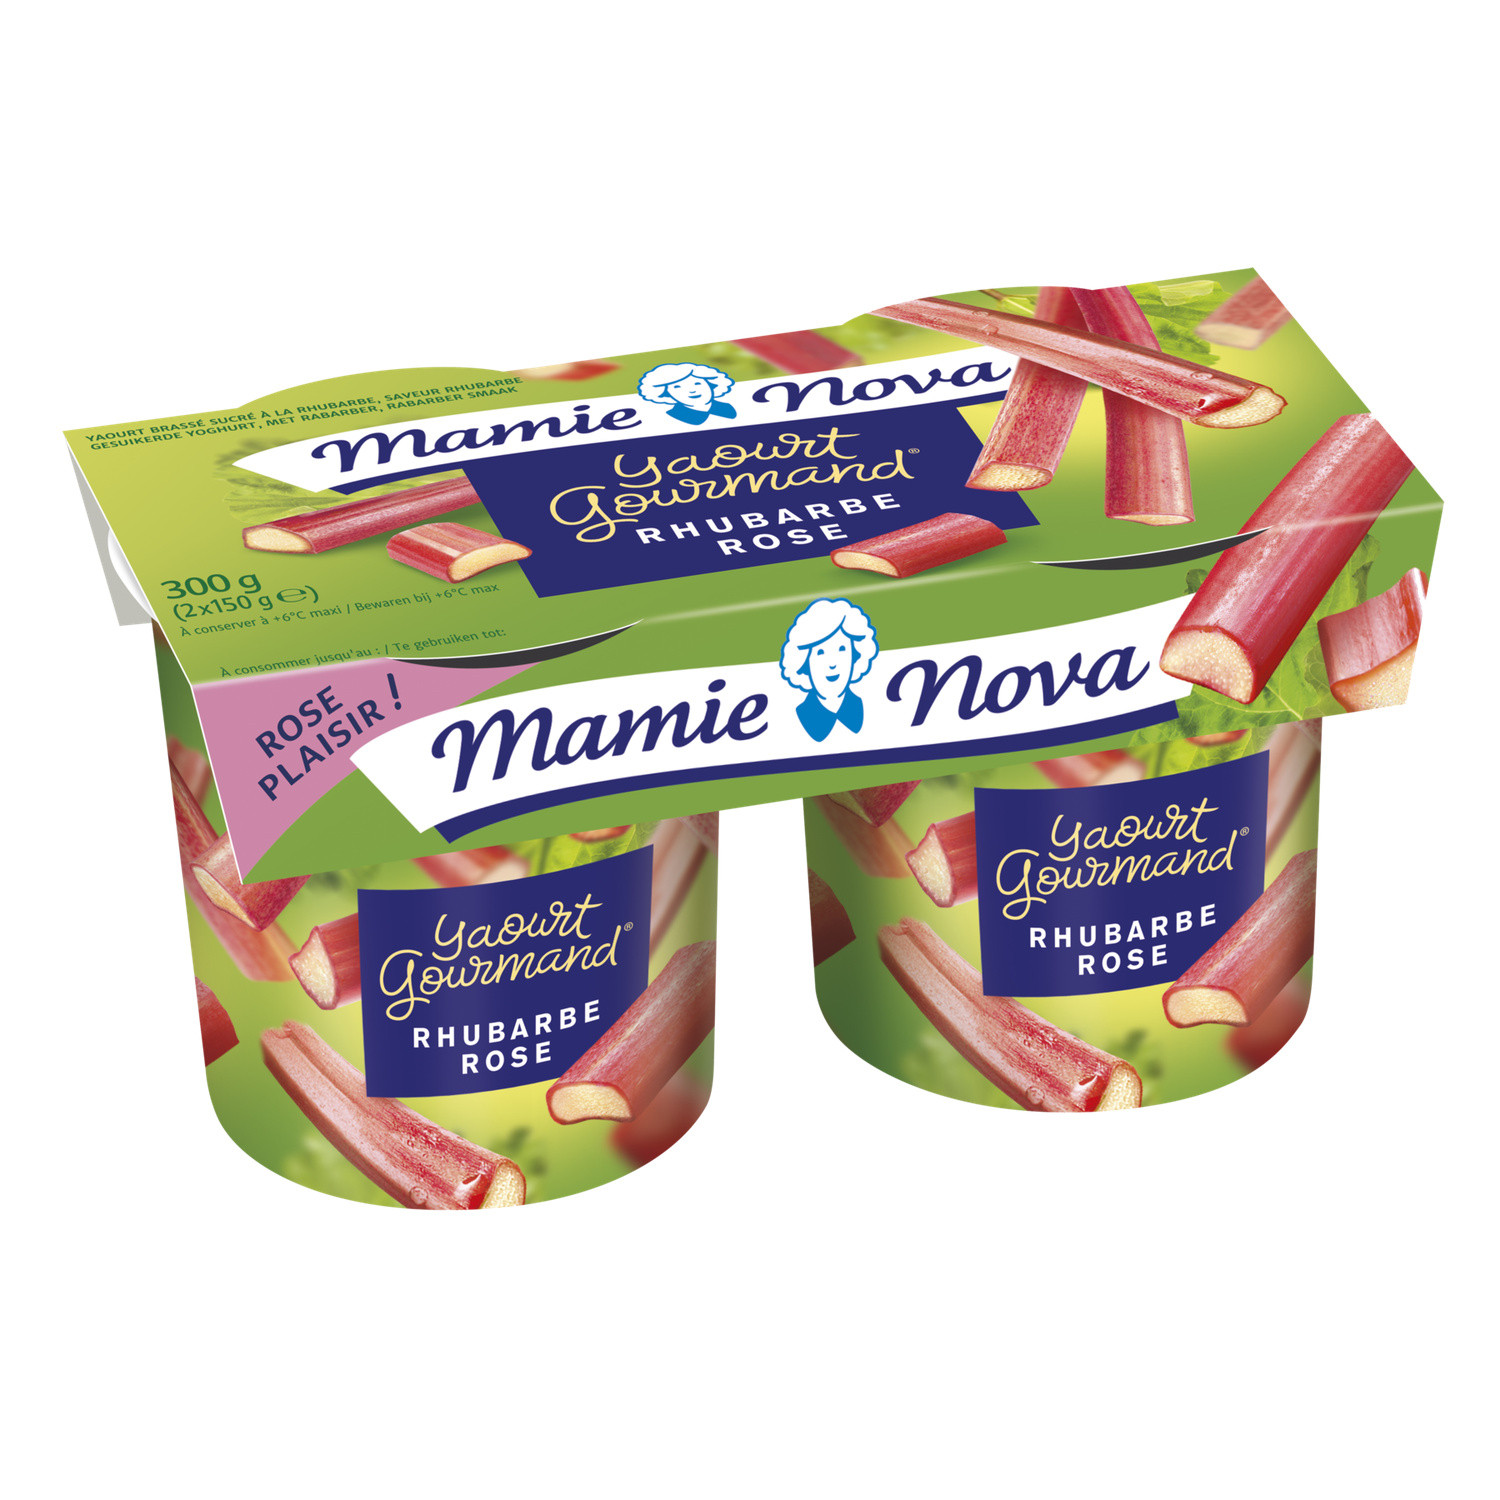 Mamie Nova Pink Rhubarbe yogurt 2x150g